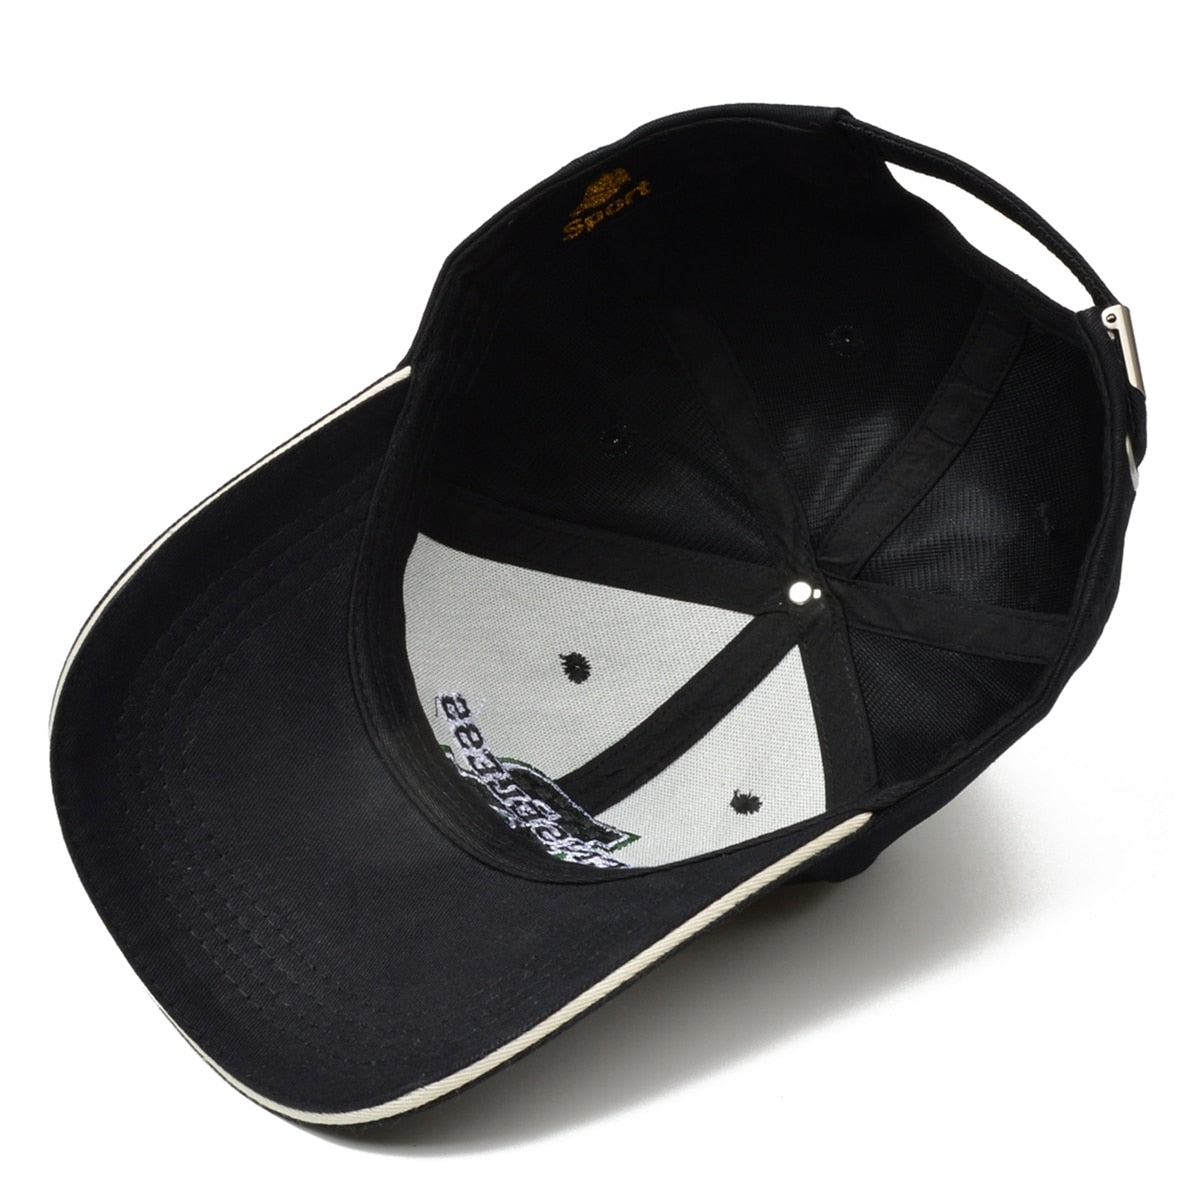 Unisex Men's Baseball Cap Golf Snapbacks Letter Embroidery Outdoor Trucker Hat Women's Kpop Fashion Sun Cap Male